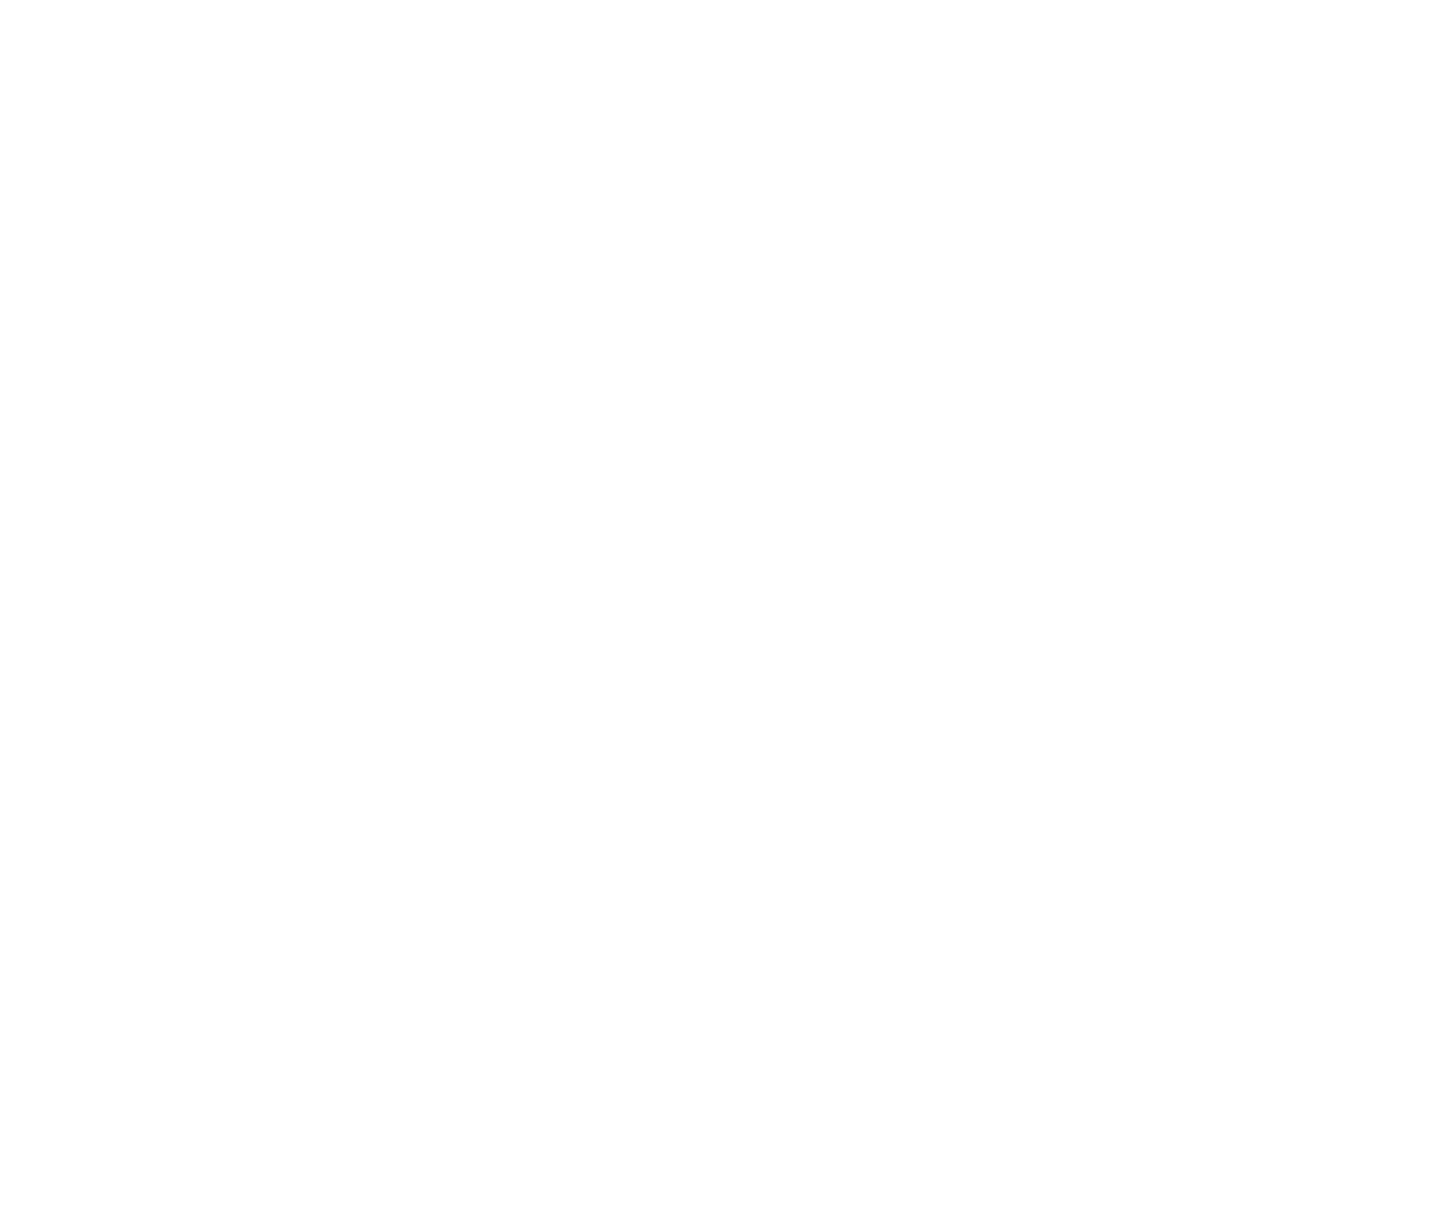 Elvira's 40th Anniversary, Very Scary, Very Special Special logo